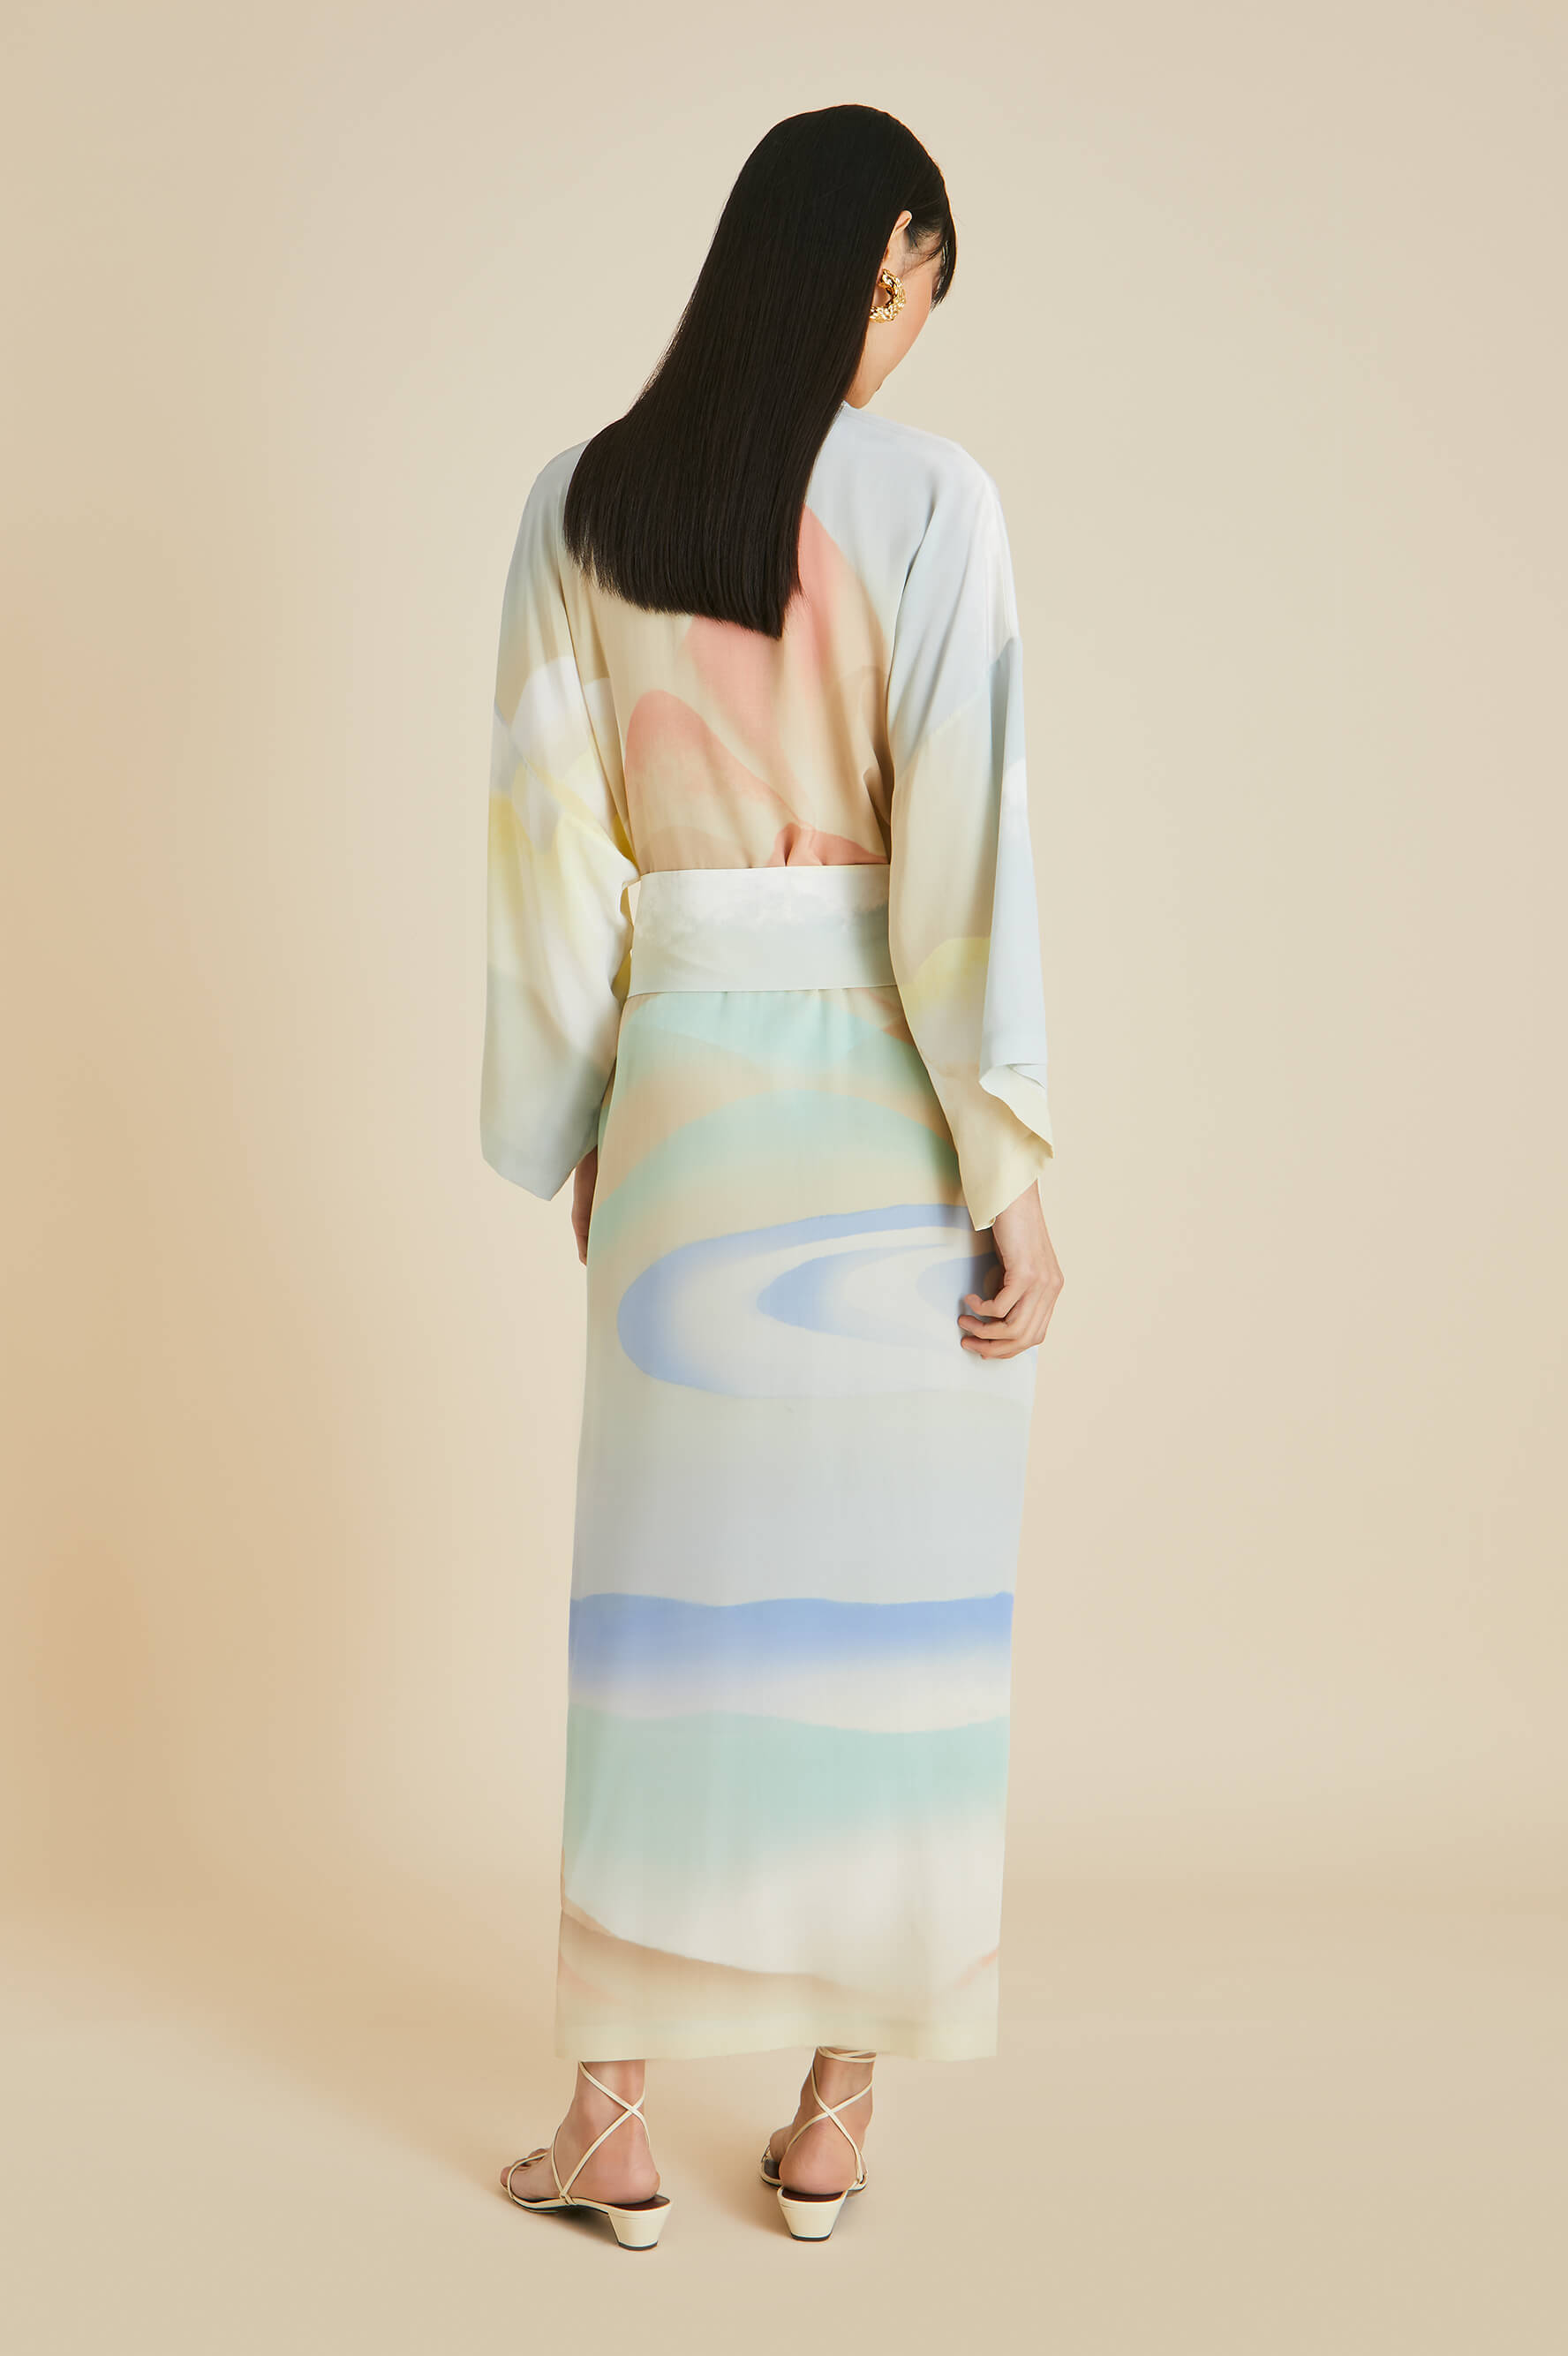 Queenie Ecliptic Blue Landscape Silk Crêpe de Chine Robe